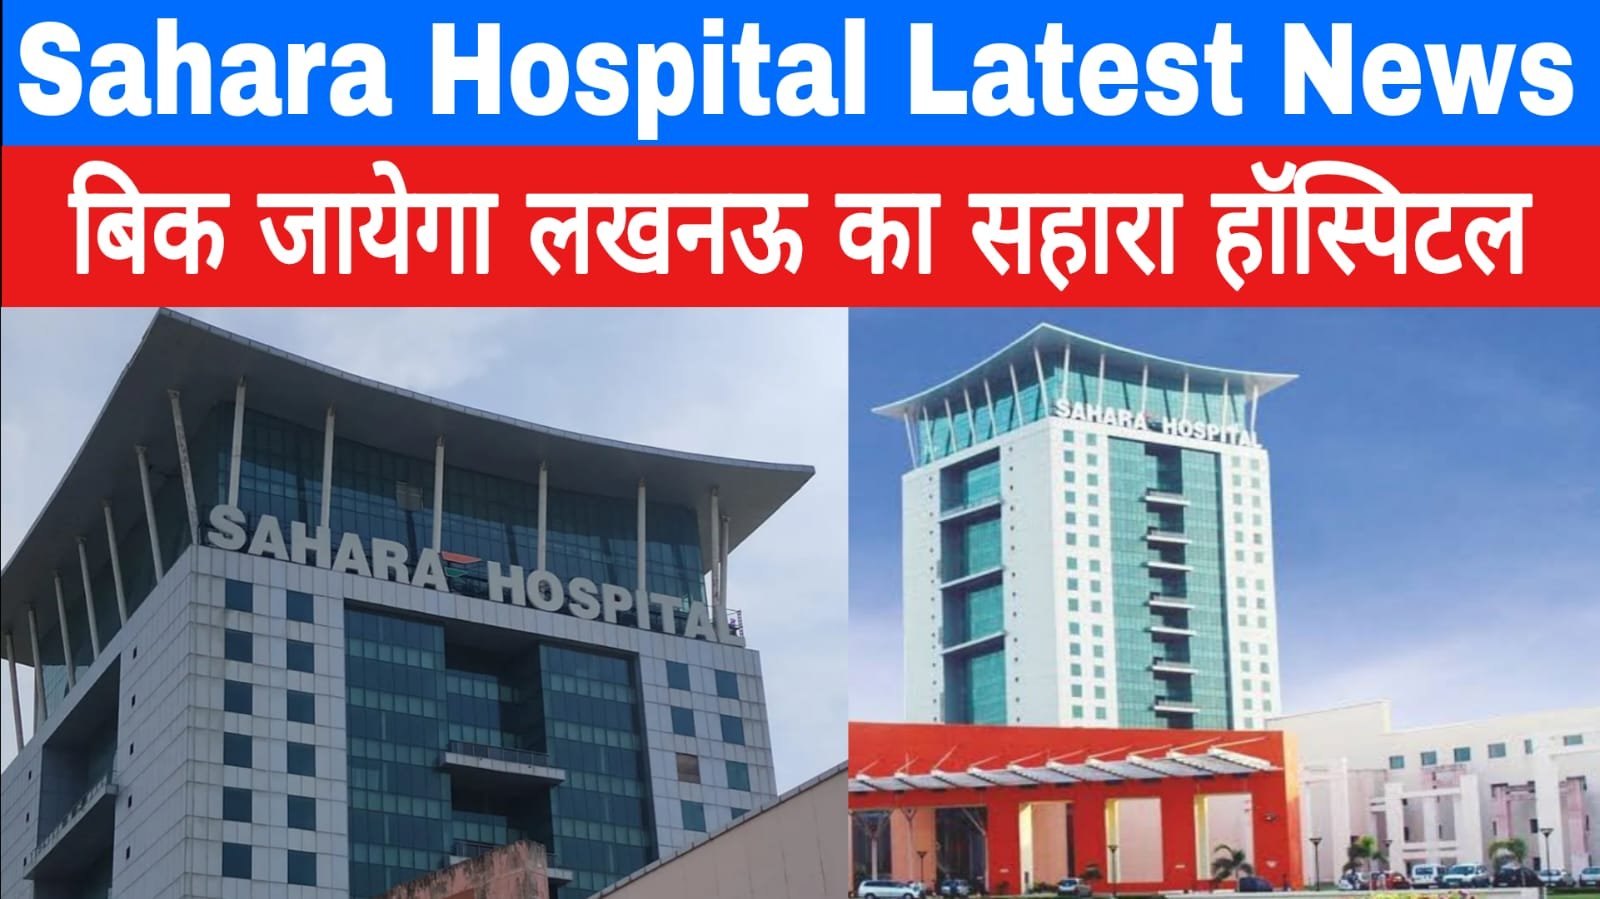 Sahara Hospital News